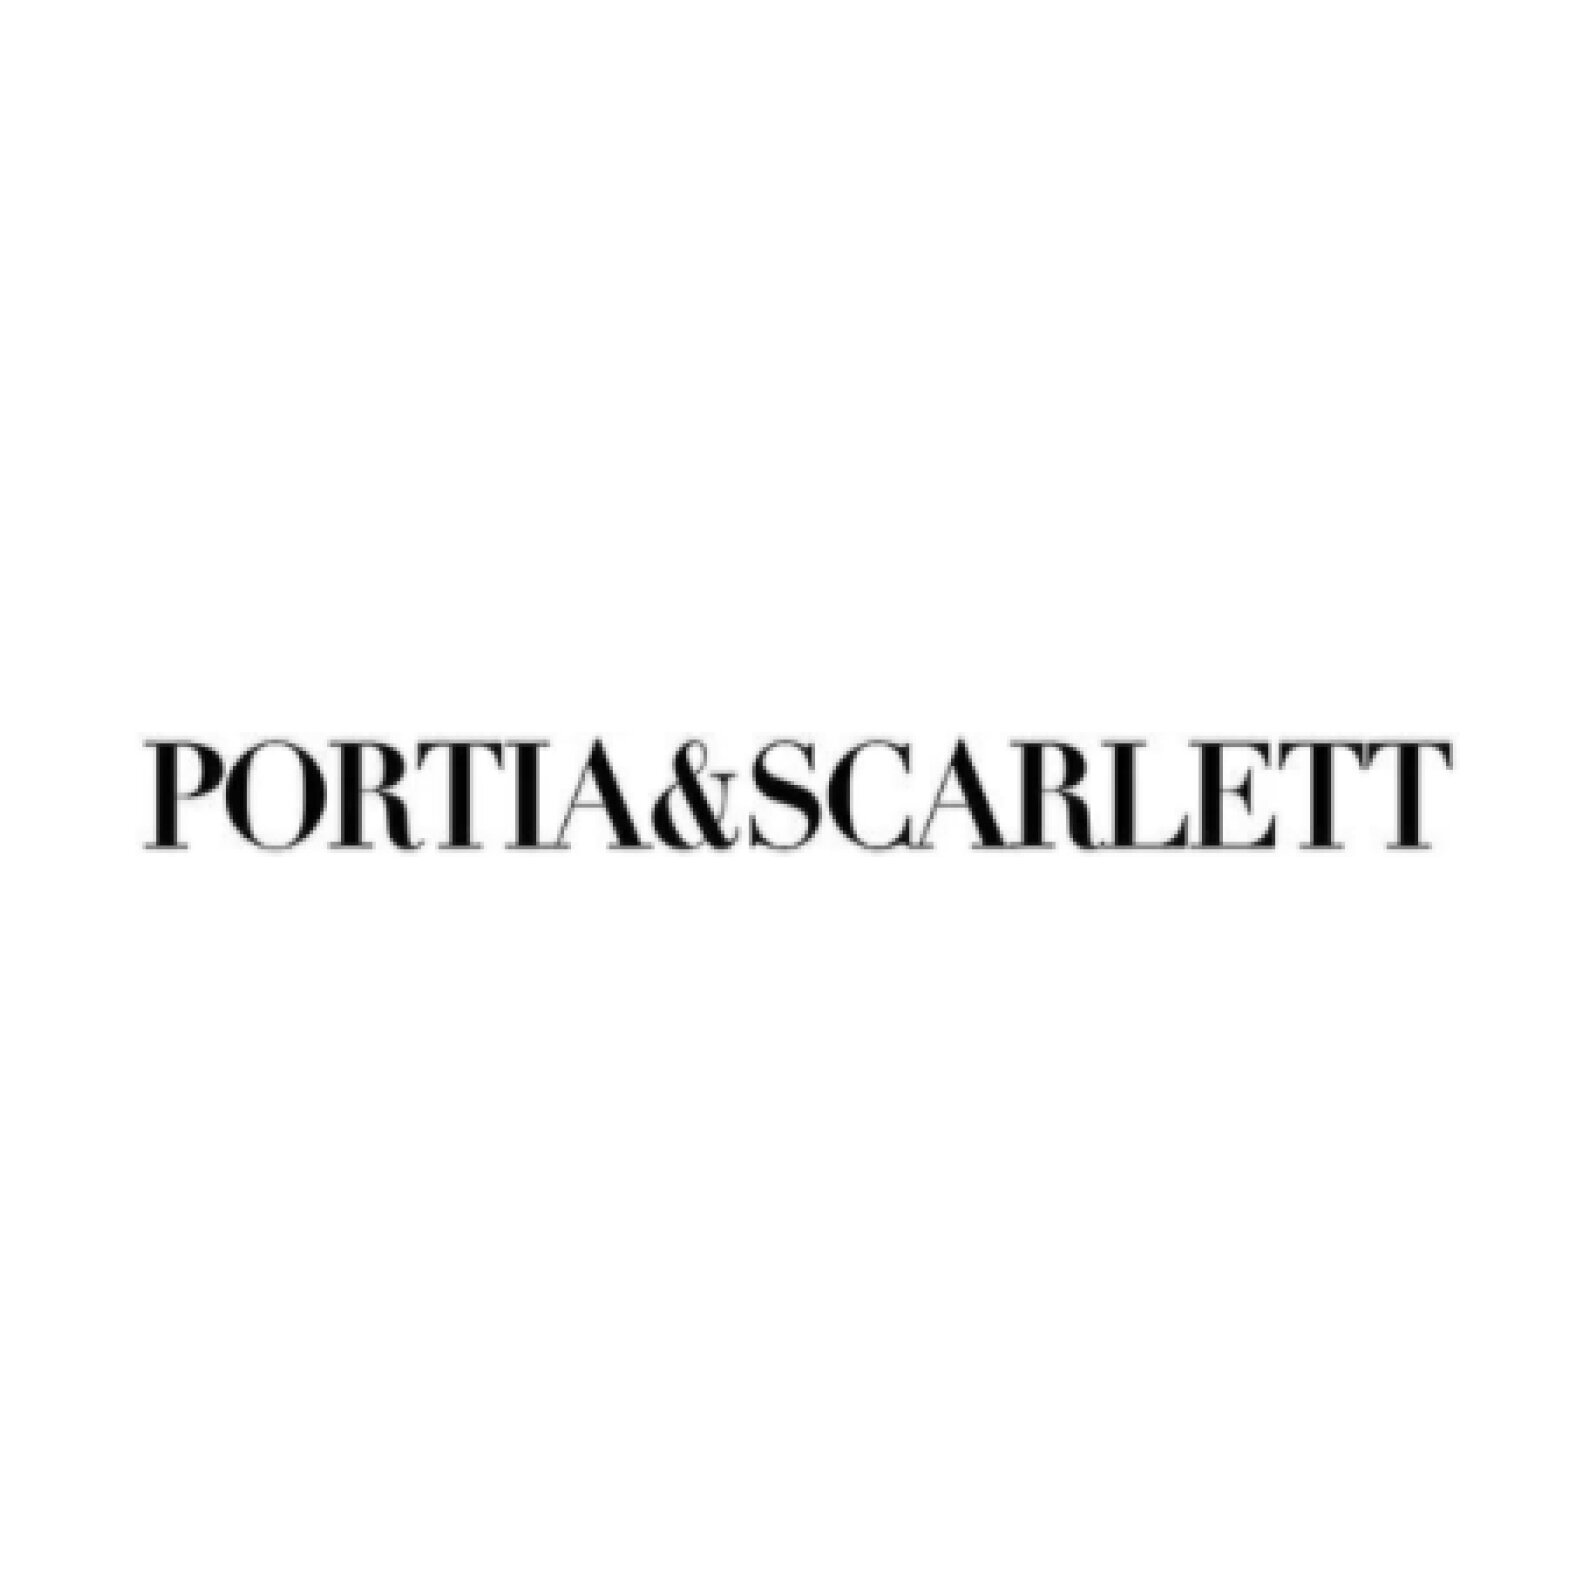 Jessica Abraham Portia Scarlett Logo.jpg